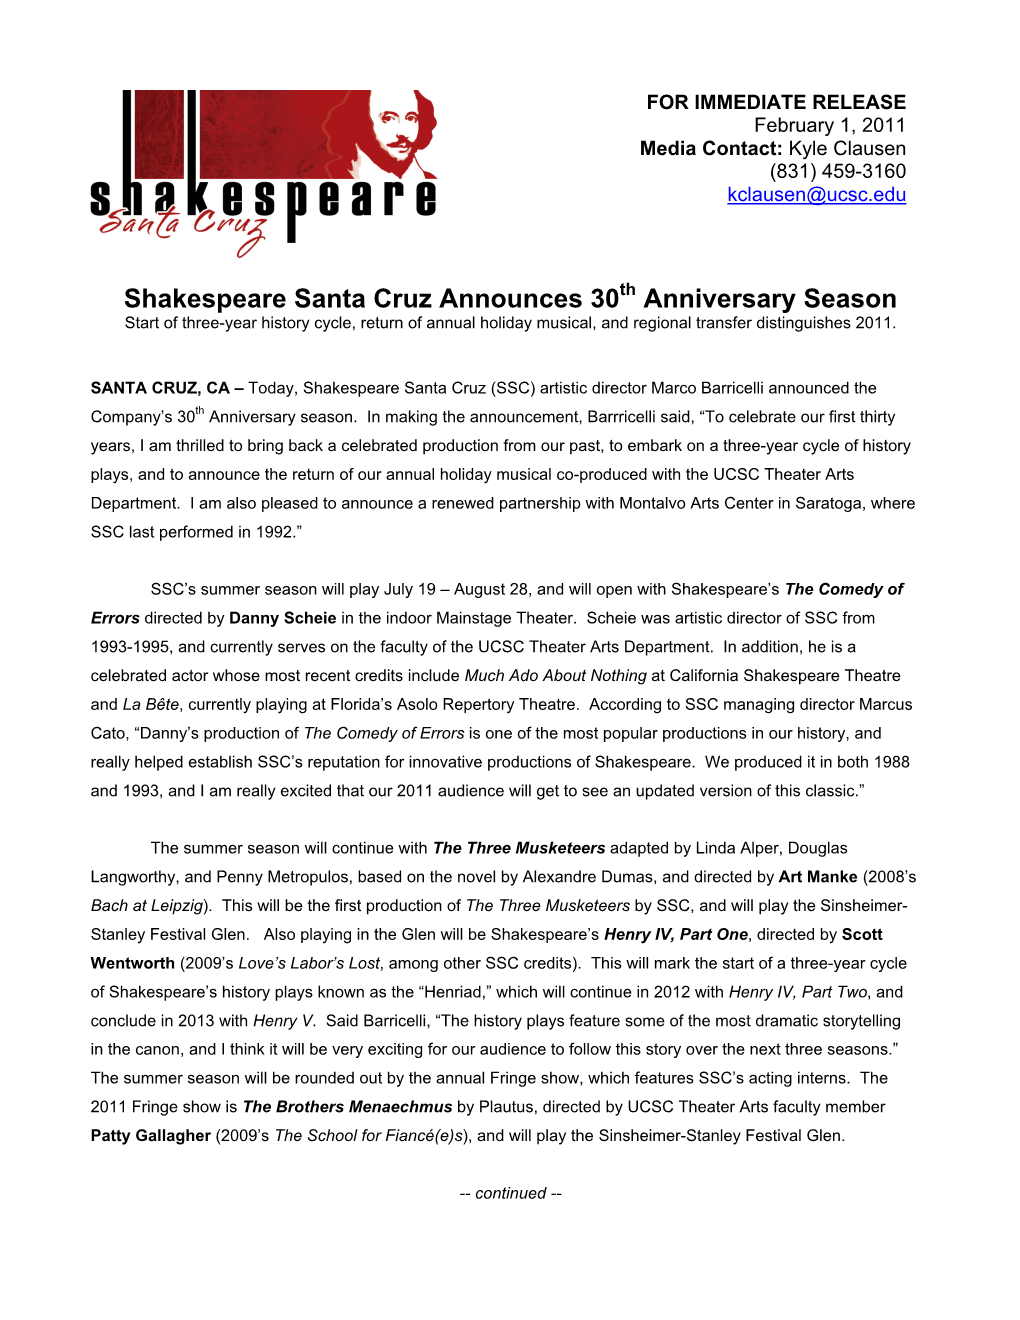 Shakespeare Santa Cruz Announces 30Th Anniversary Season Start of Three-Year History Cycle, Return of Annual Holiday Musical, and Regional Transfer Distinguishes 2011